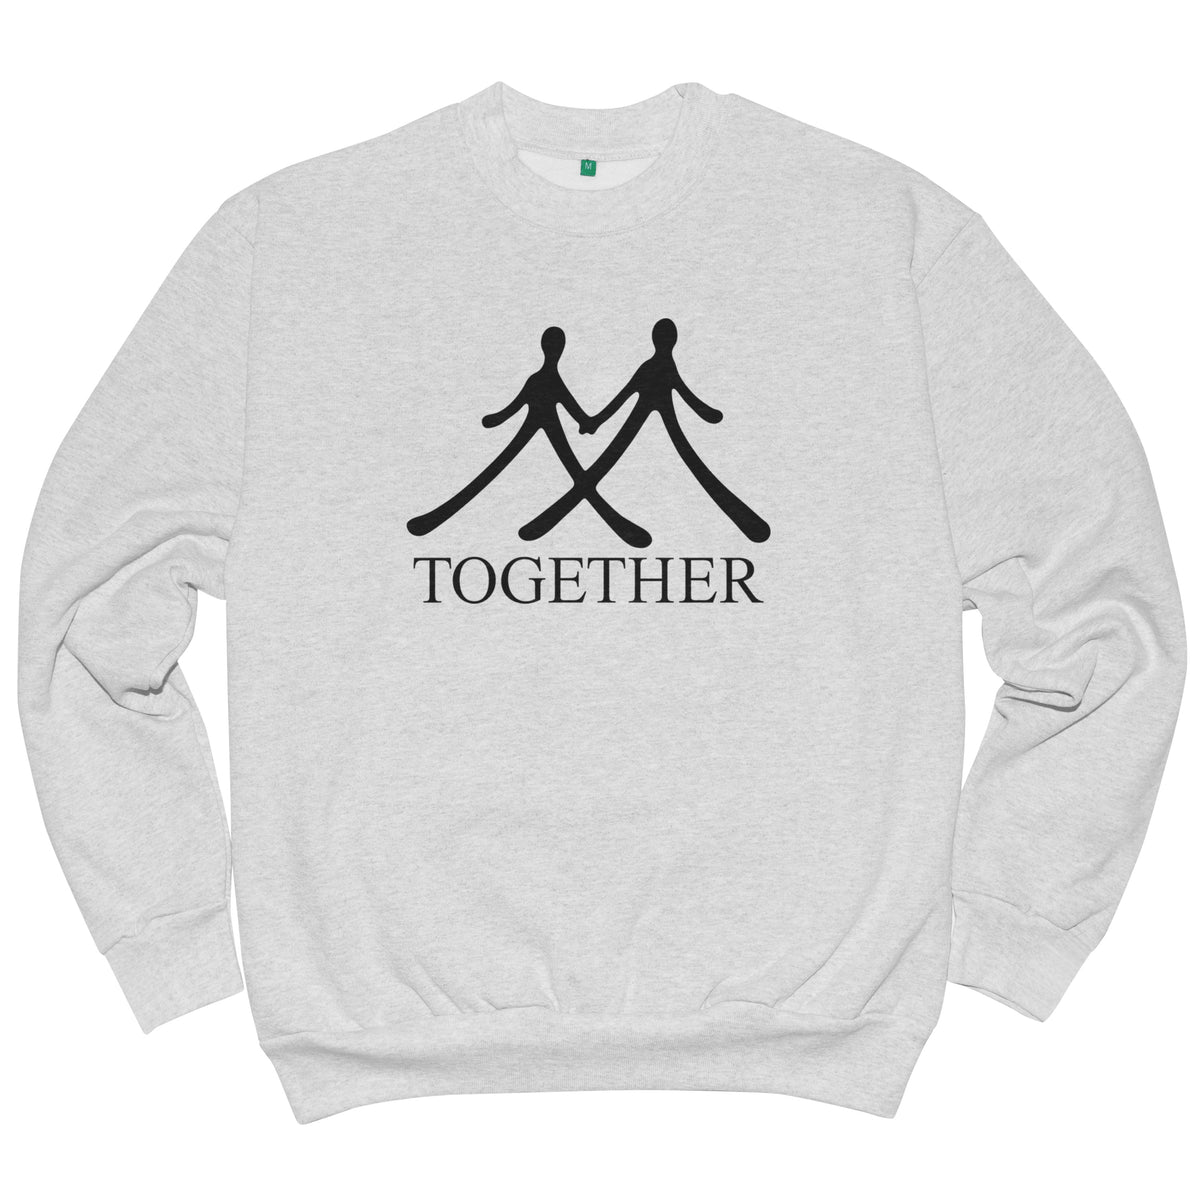 Together Crewneck Sweatshirt (Heather)